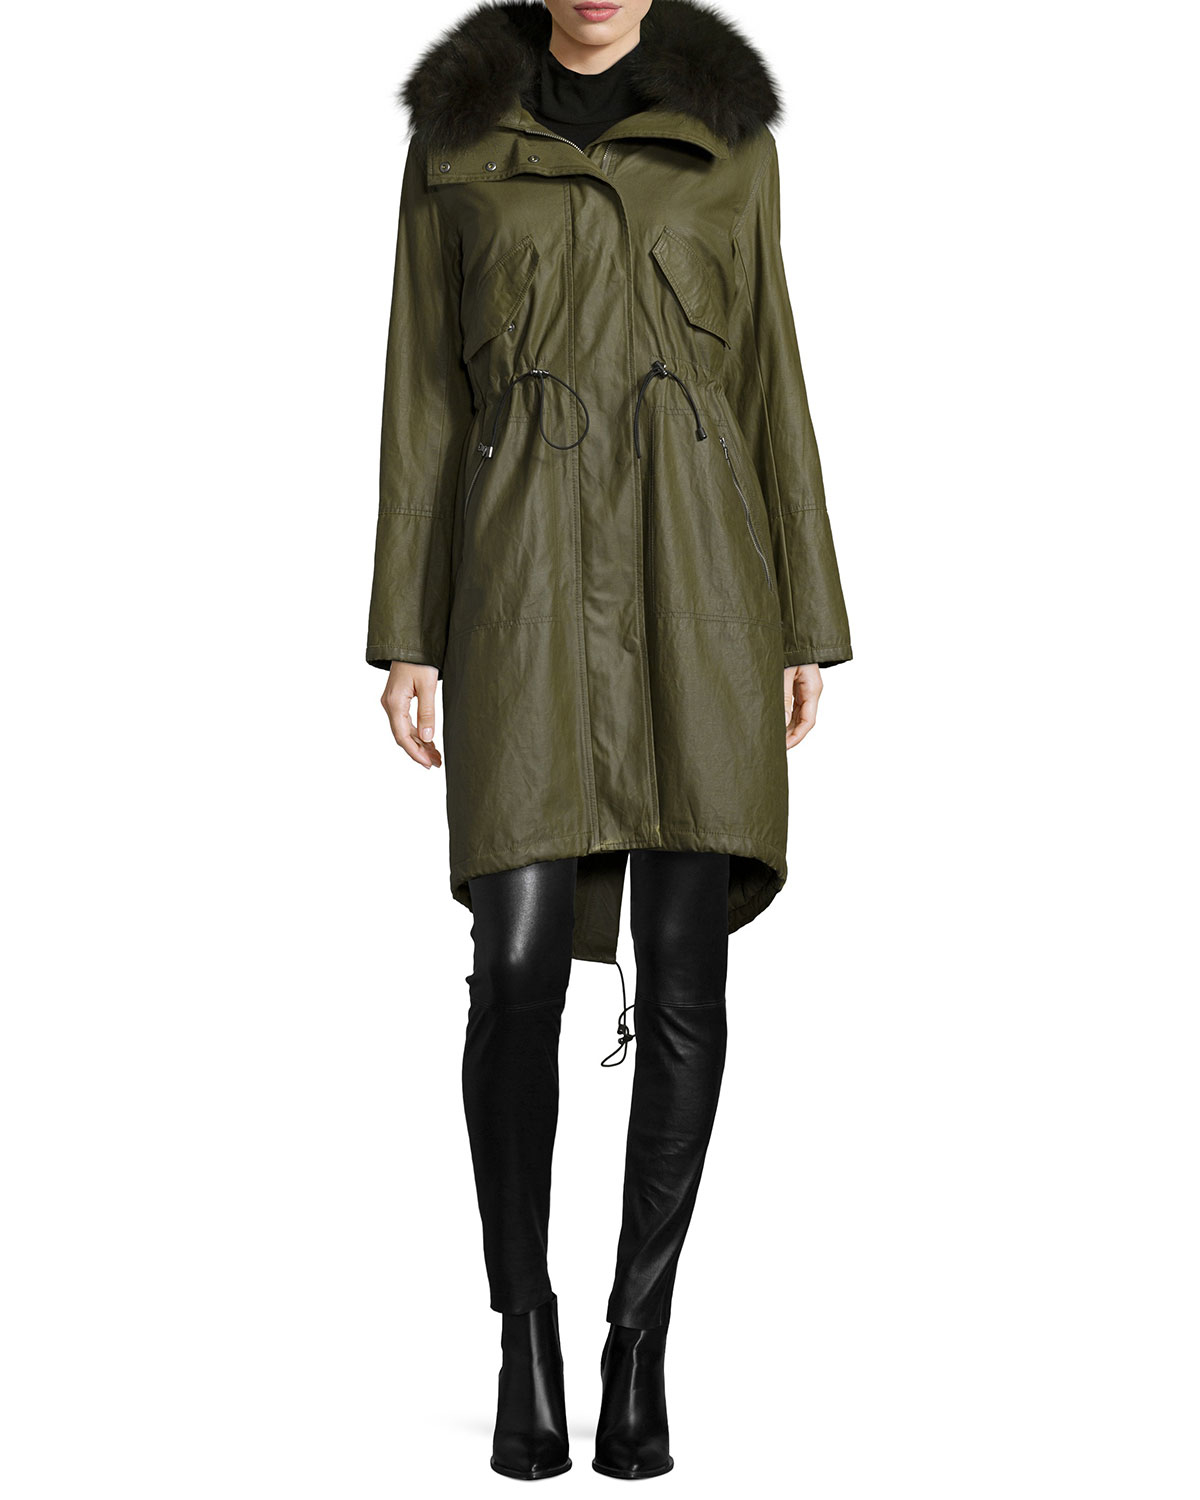 Alice + olivia Quinton Long-sleeve Hooded Fur-trim Coat in Green ...